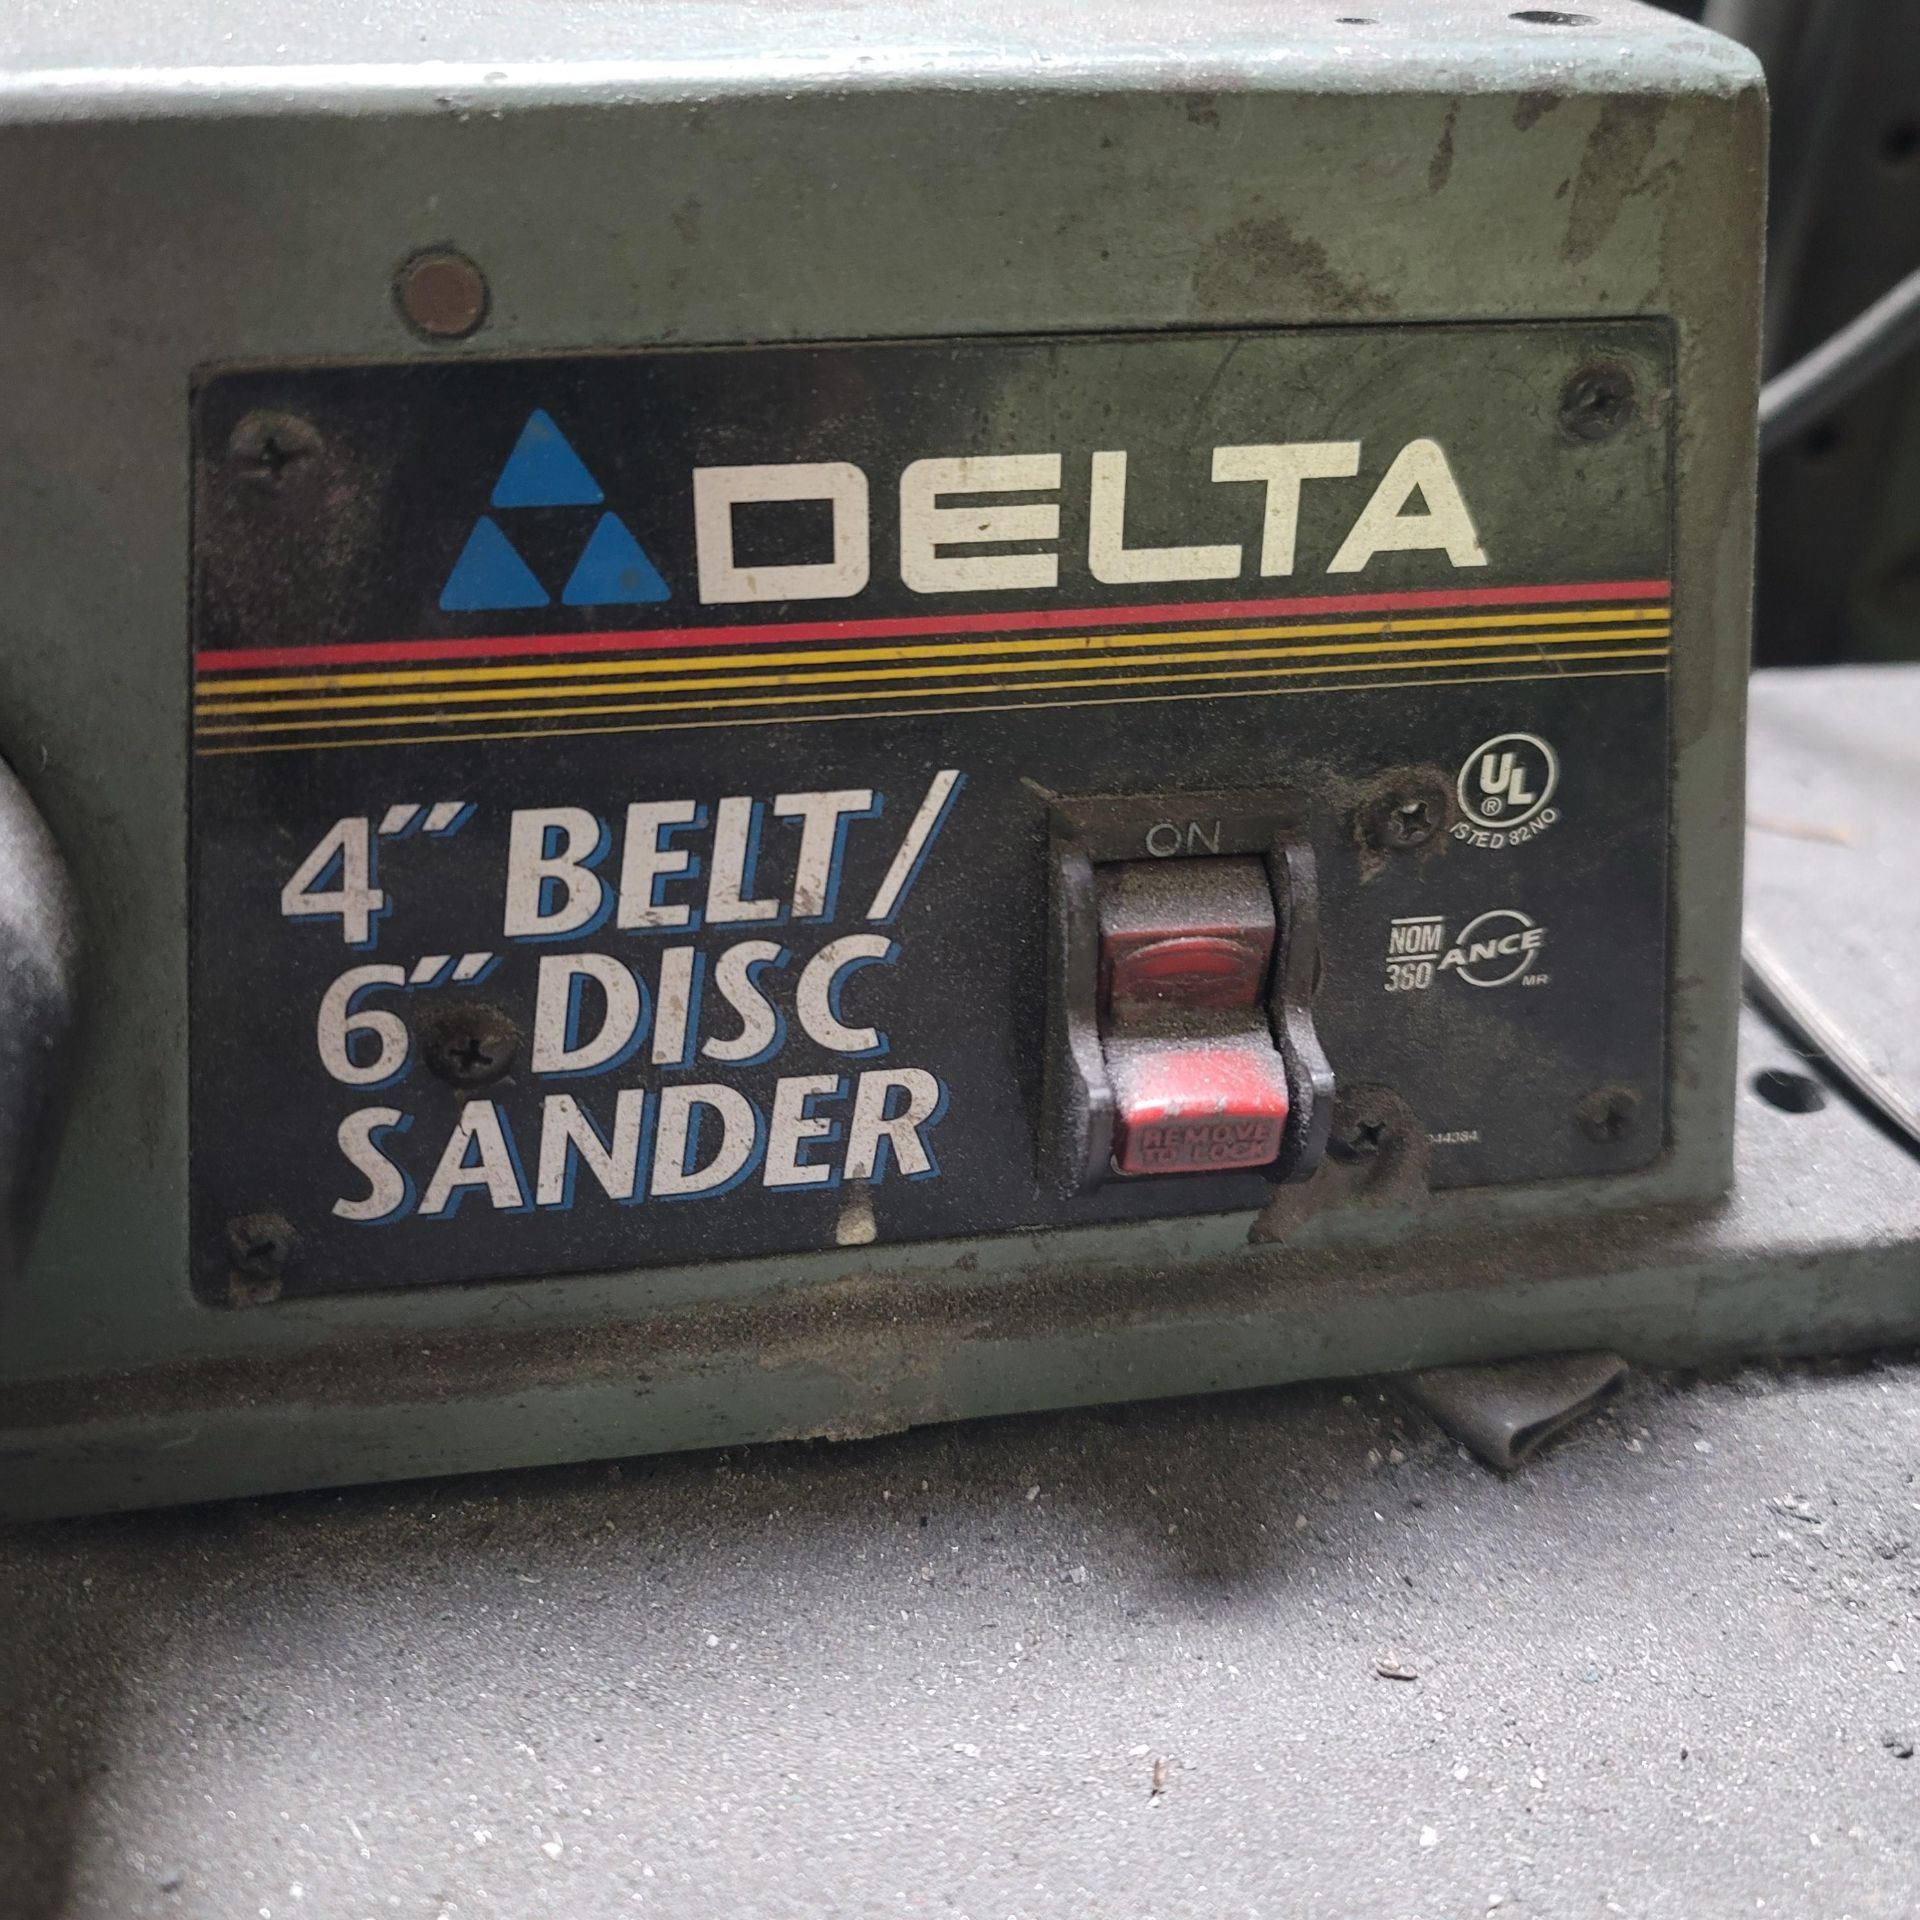 DELTA 4" BELT/6" DISC SANDER, MODEL 31-460 TYPE 2, 120V, SINGLE PHASE, 1/3 HP, S/N P 2002 - Image 2 of 4